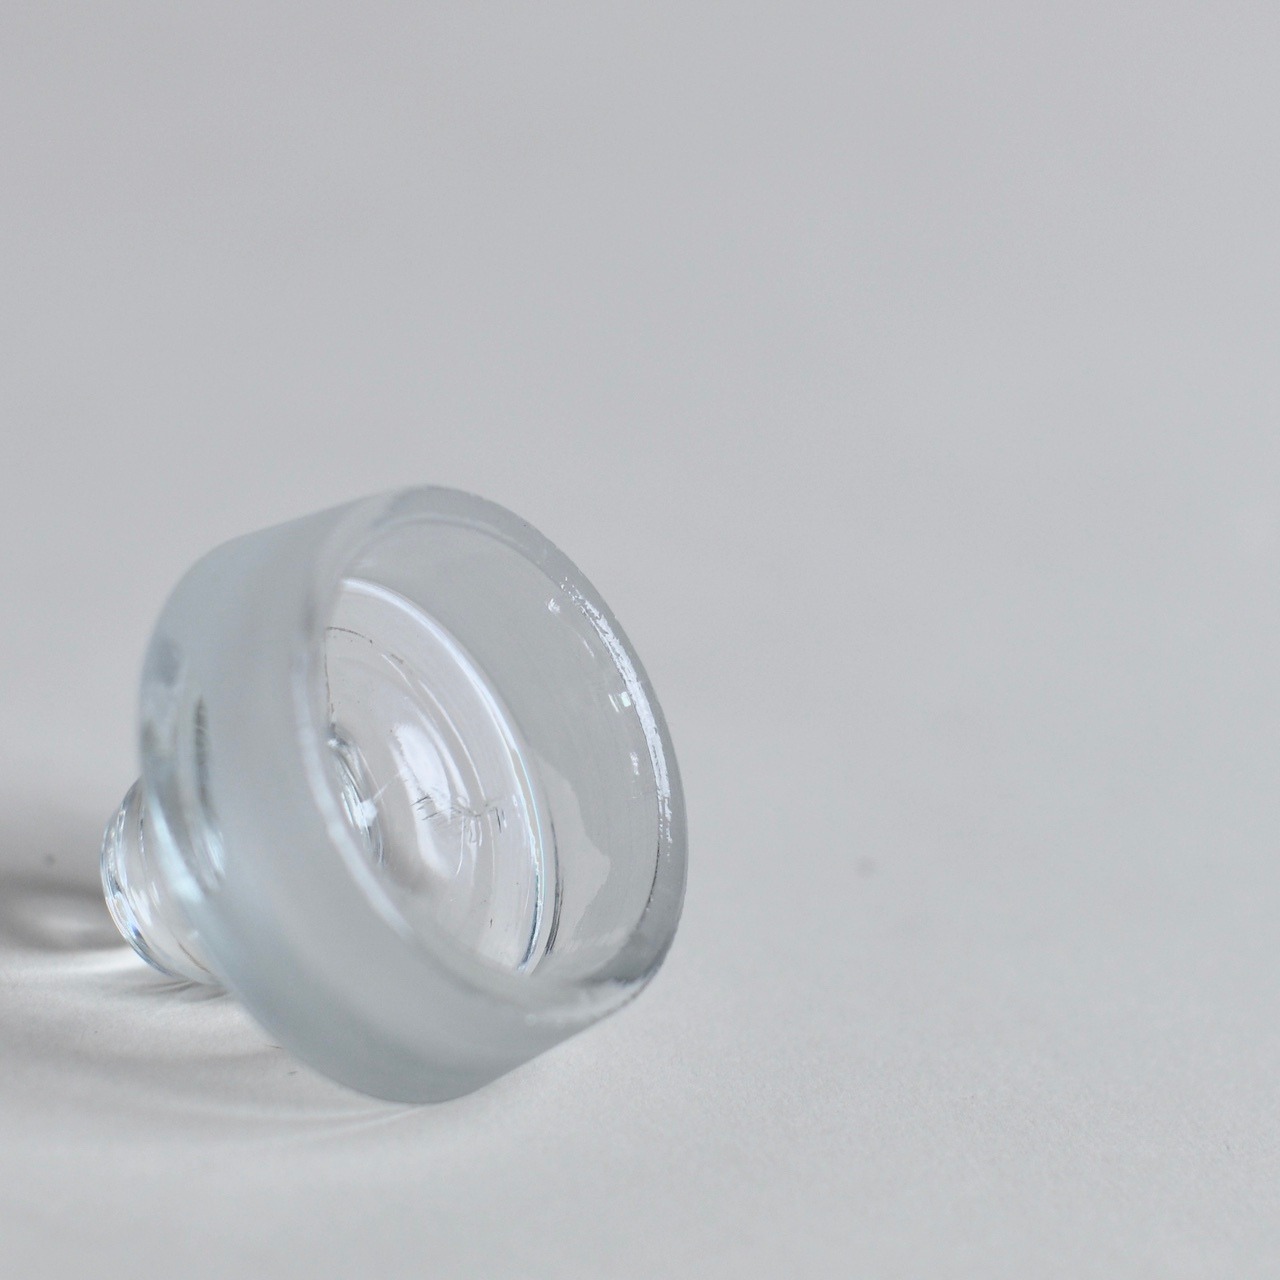 Glass Canister / ガラス キャニスター〈花瓶 / ボトル / ディスプレイ 〉1806-0185-01